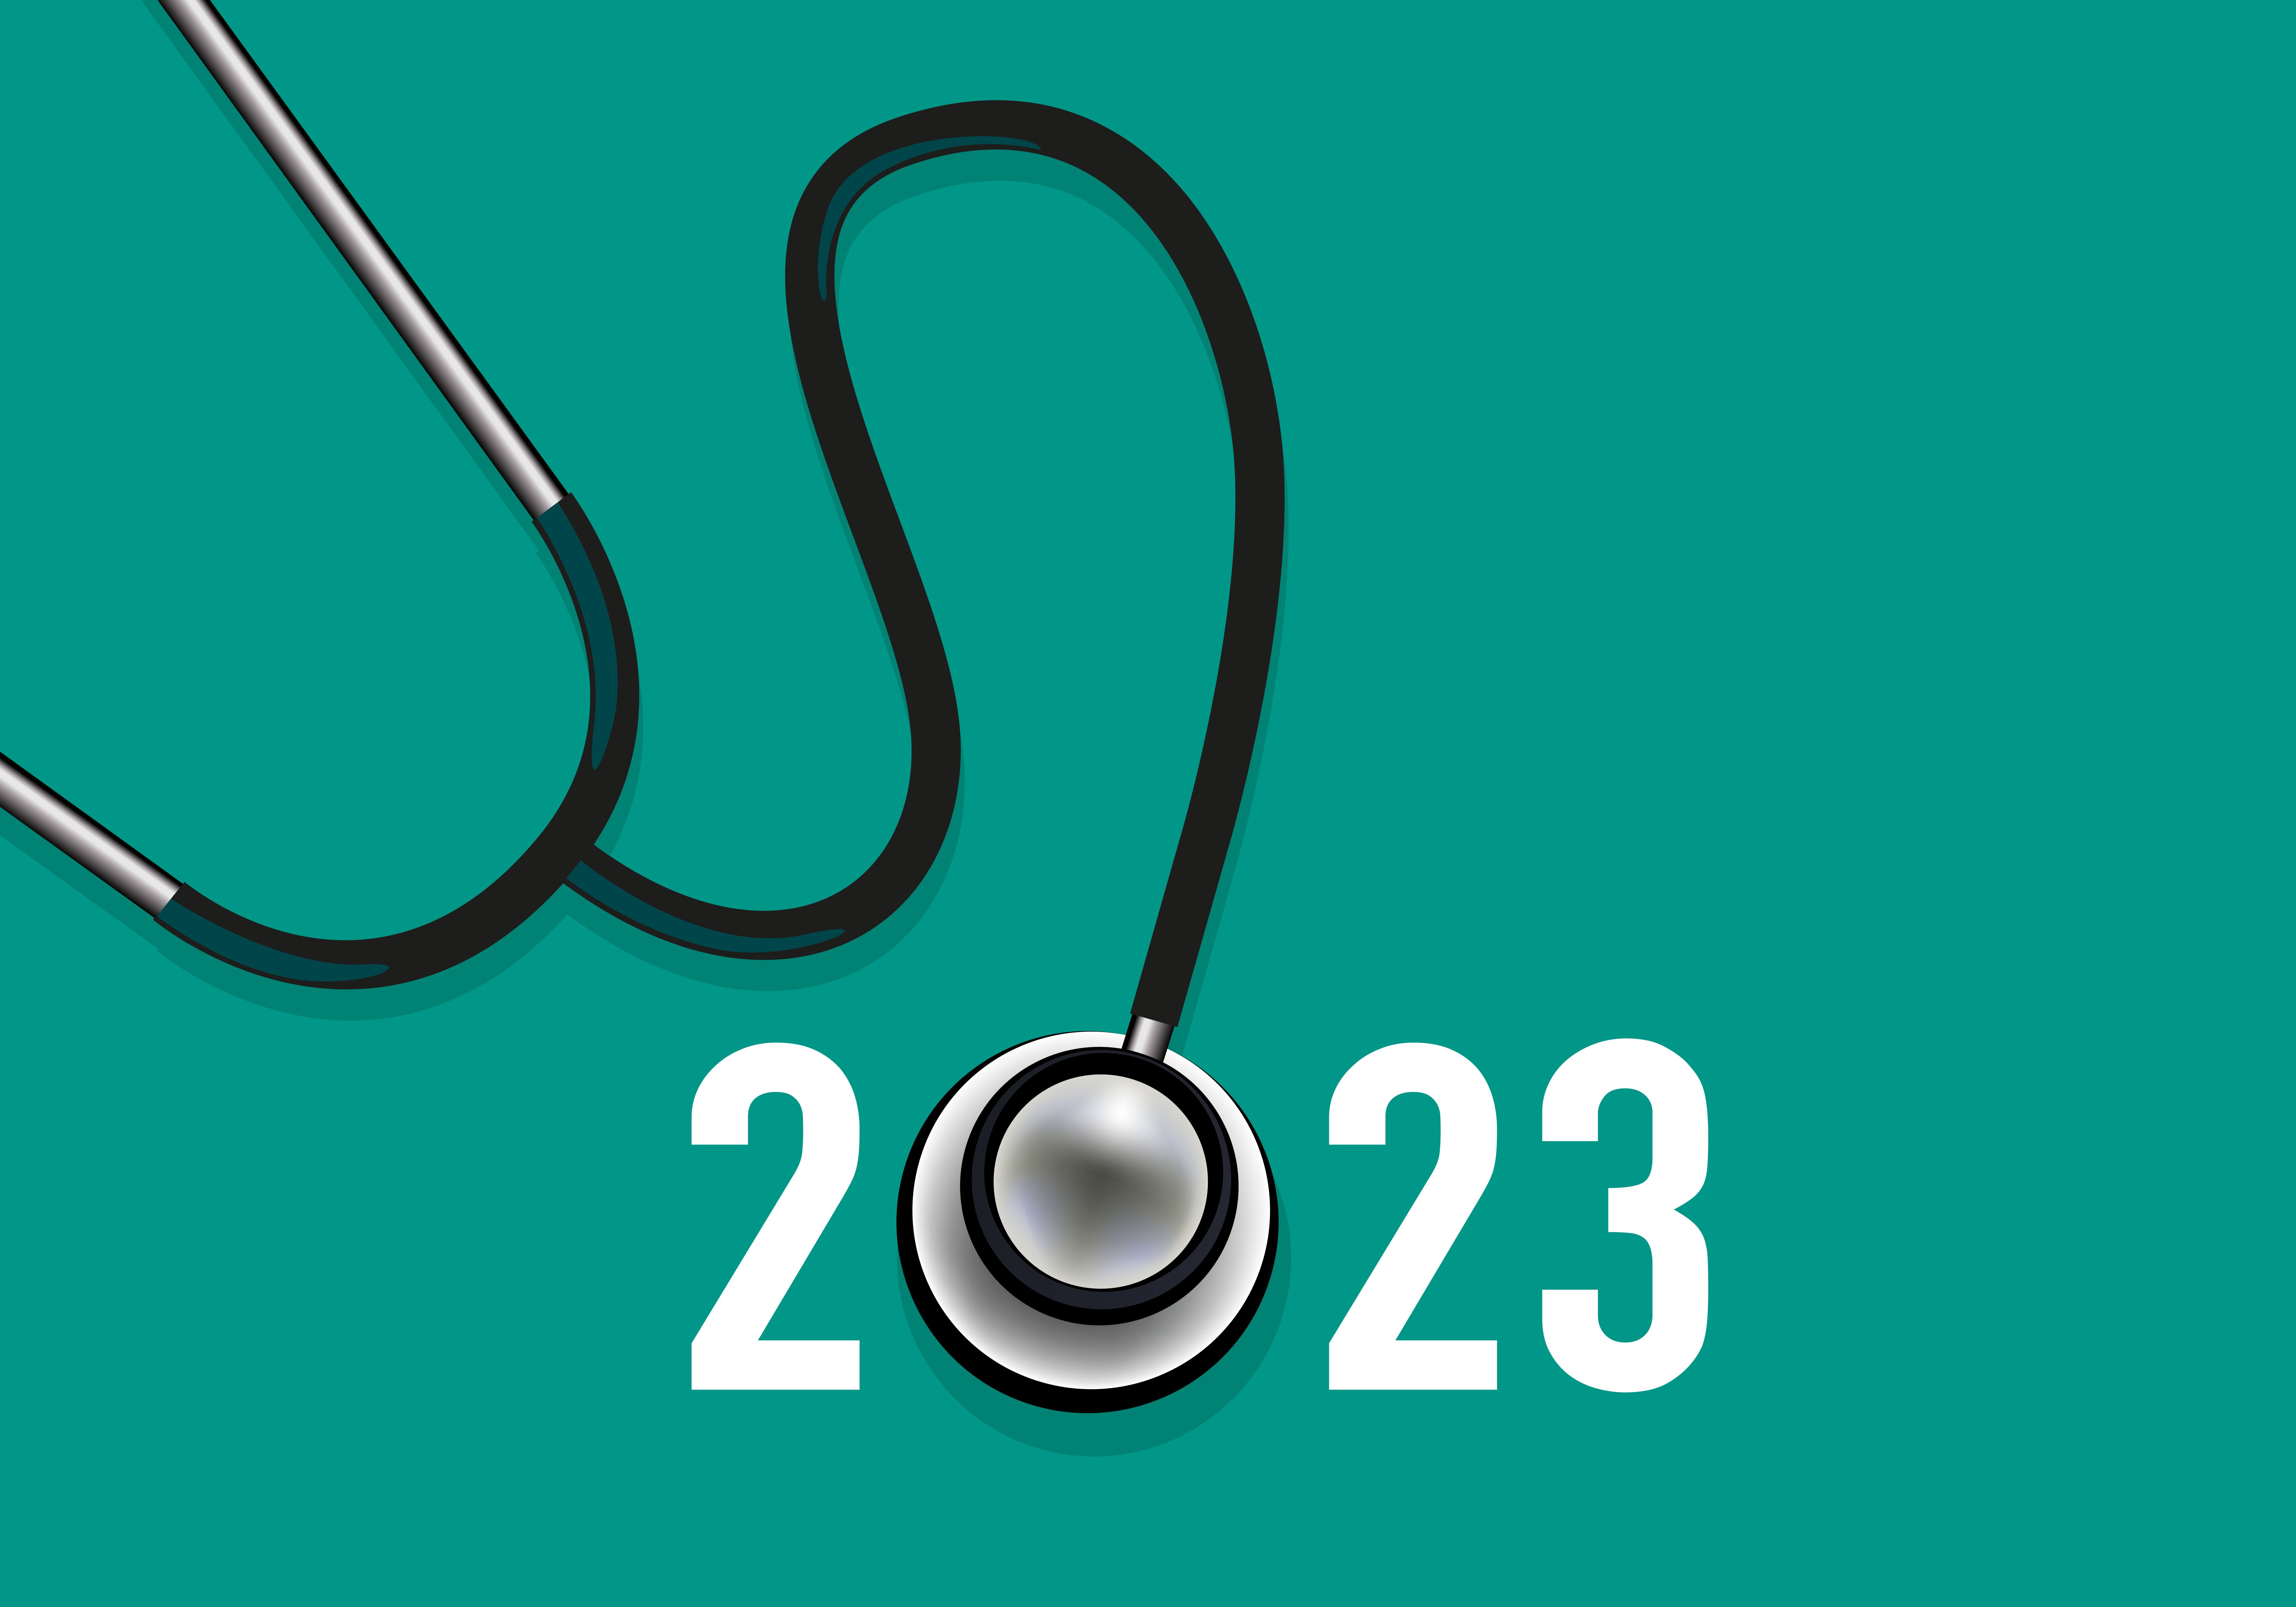 healthcare 2023 image